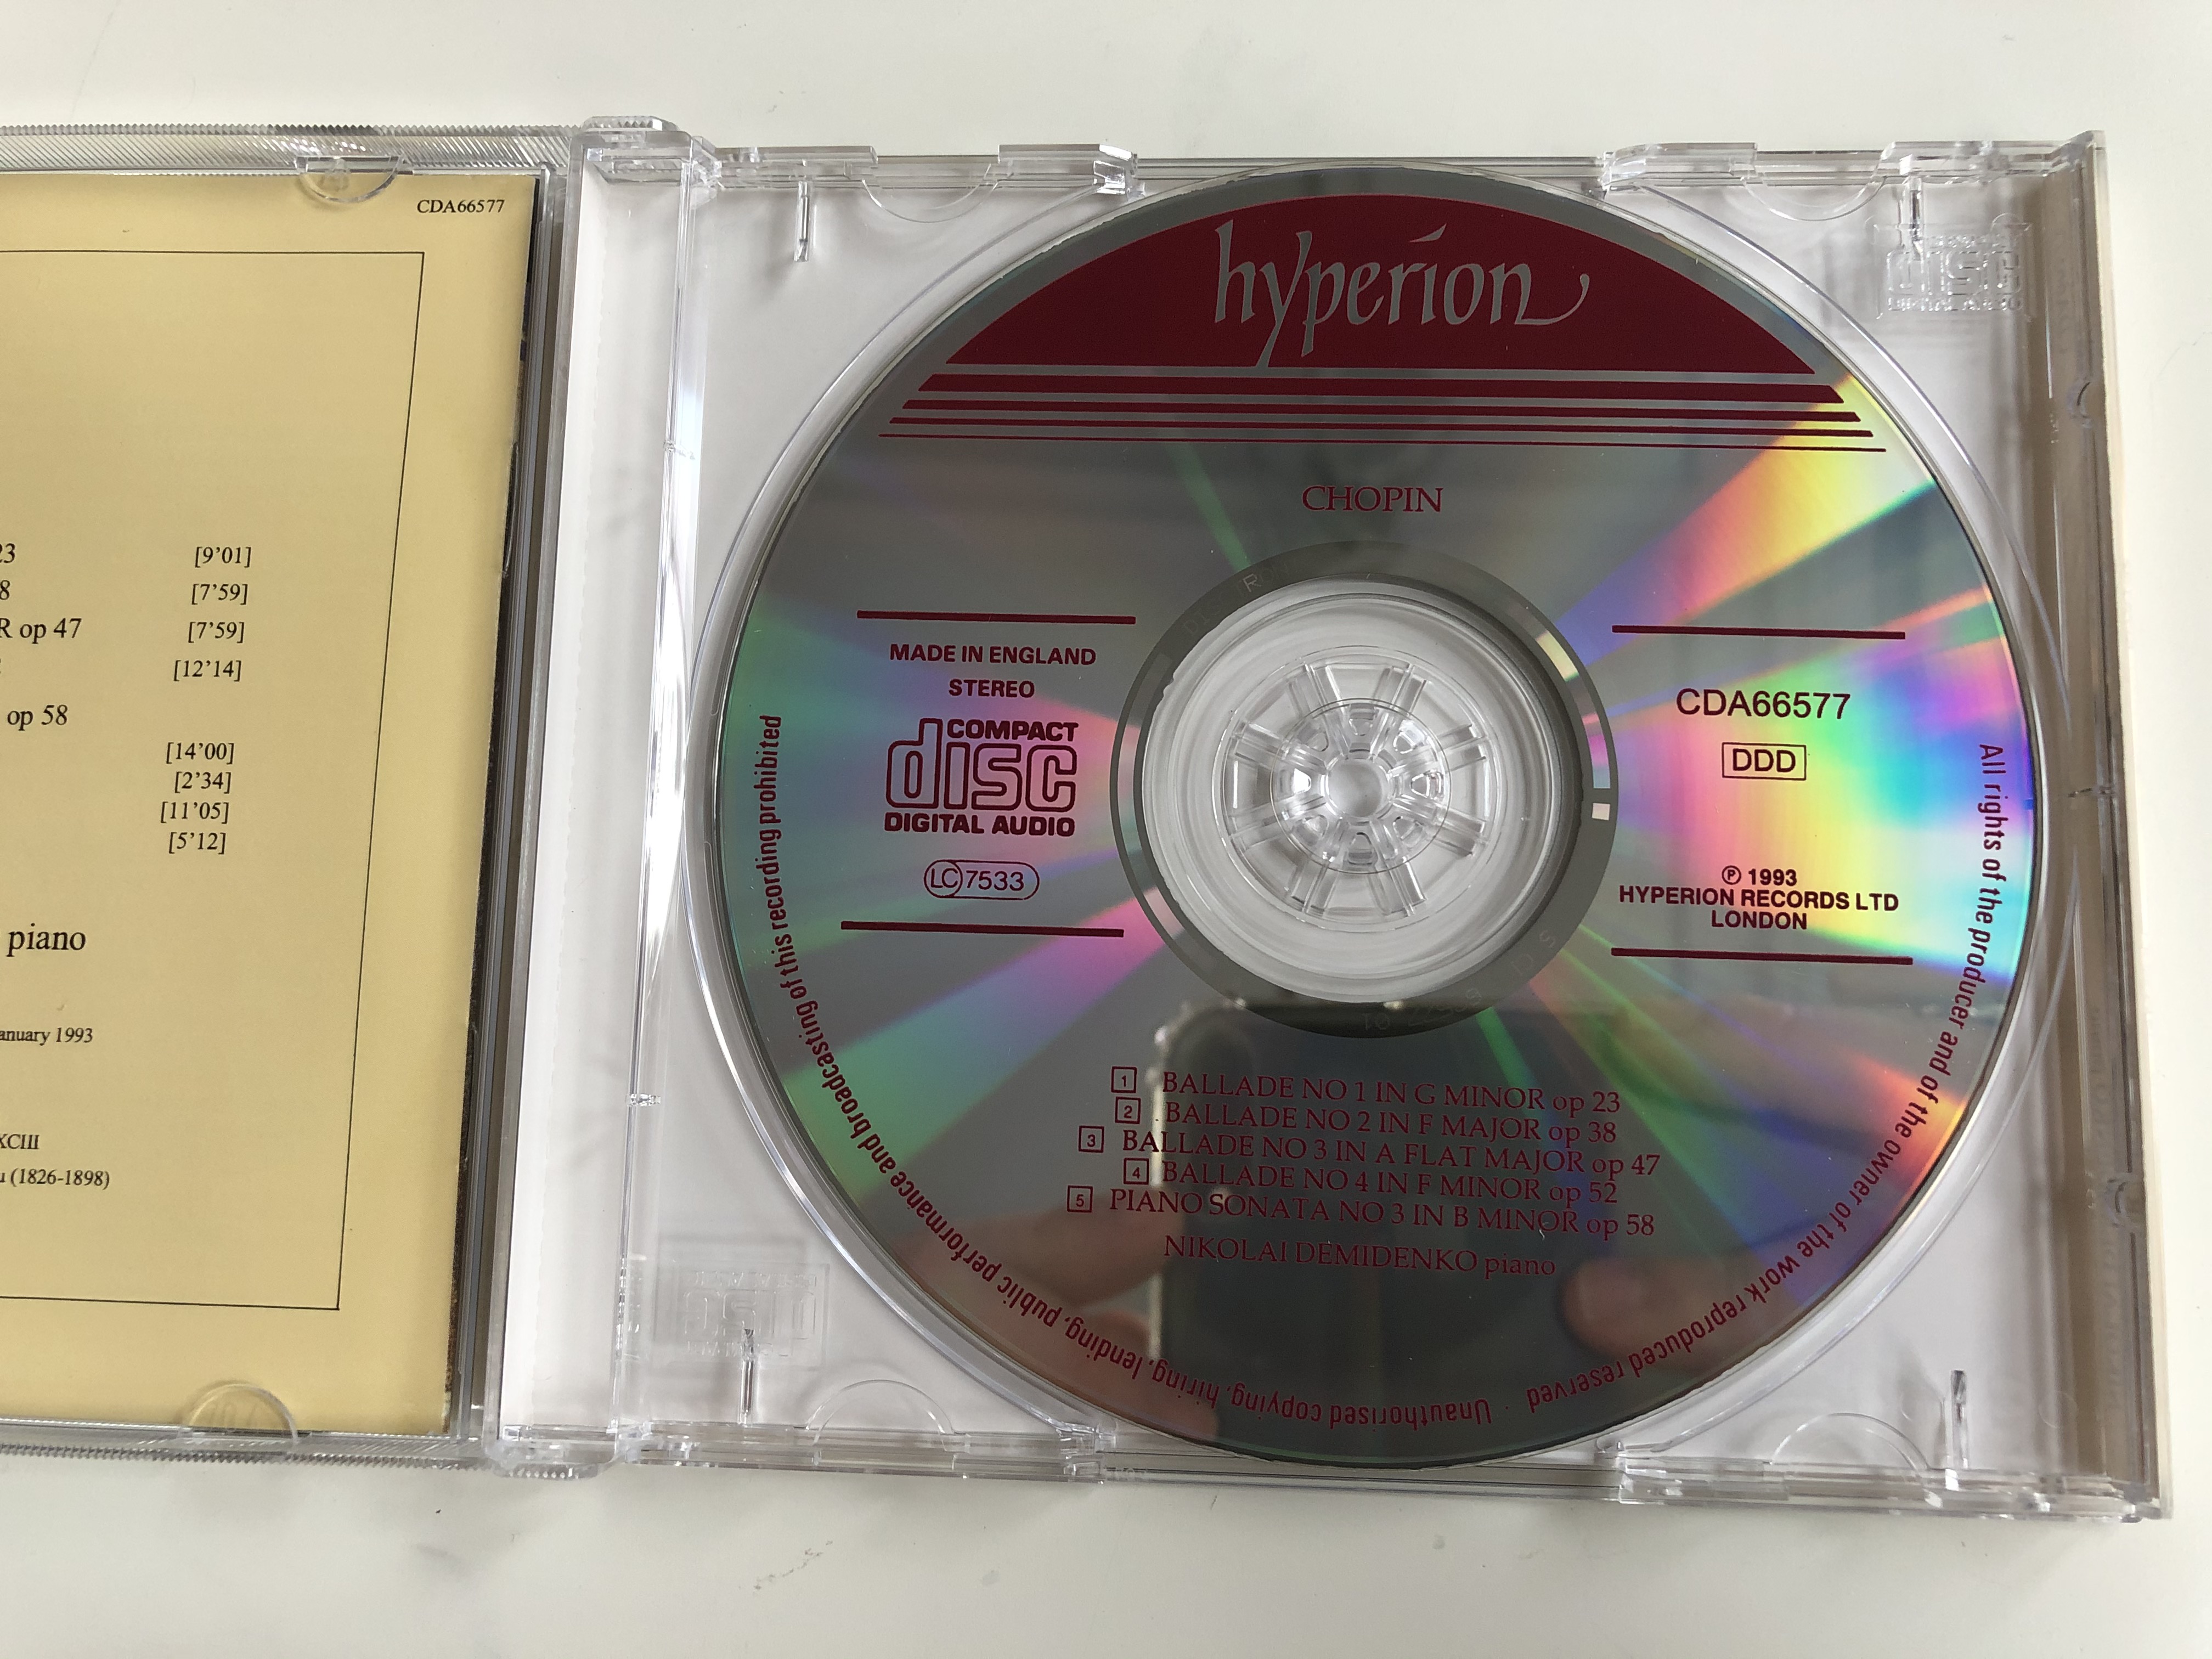 chopin-ballades-third-sonata-nikolai-demidenko-hyperion-audio-cd-1993-stereo-cda66577-3-.jpg